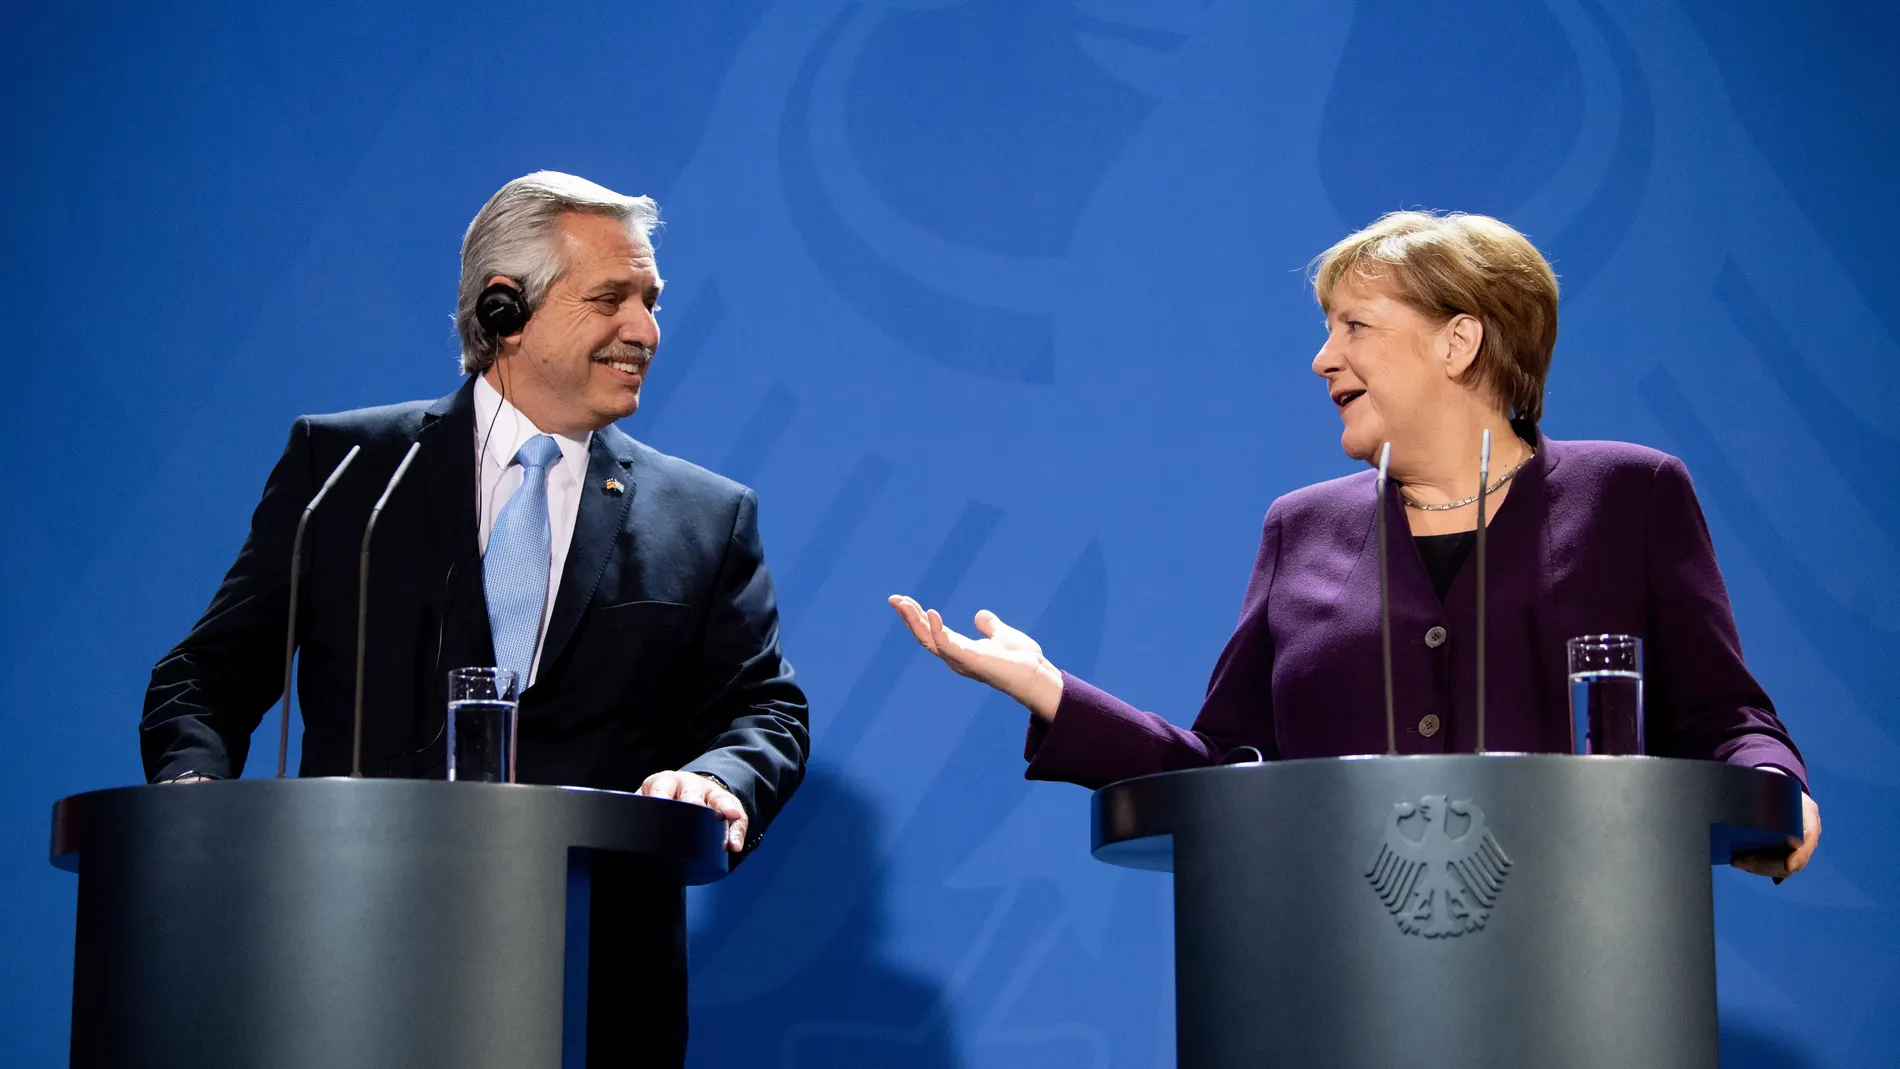 Argentina President, Alberto Fernandez meets German Chancellor Merkel